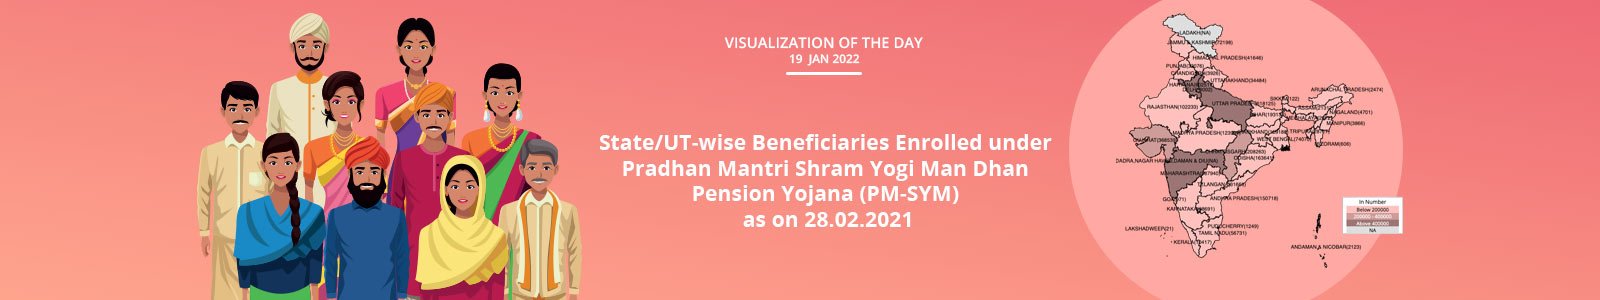 Visualization of the Day - 19th January 2022: State/UT-wise Beneficiaries Enrolled under Pradhan Mantri Shram Yogi Man Dhan Pension Yojana (PM-SYM) as on 28.02.2021></a></p>
</body></html>